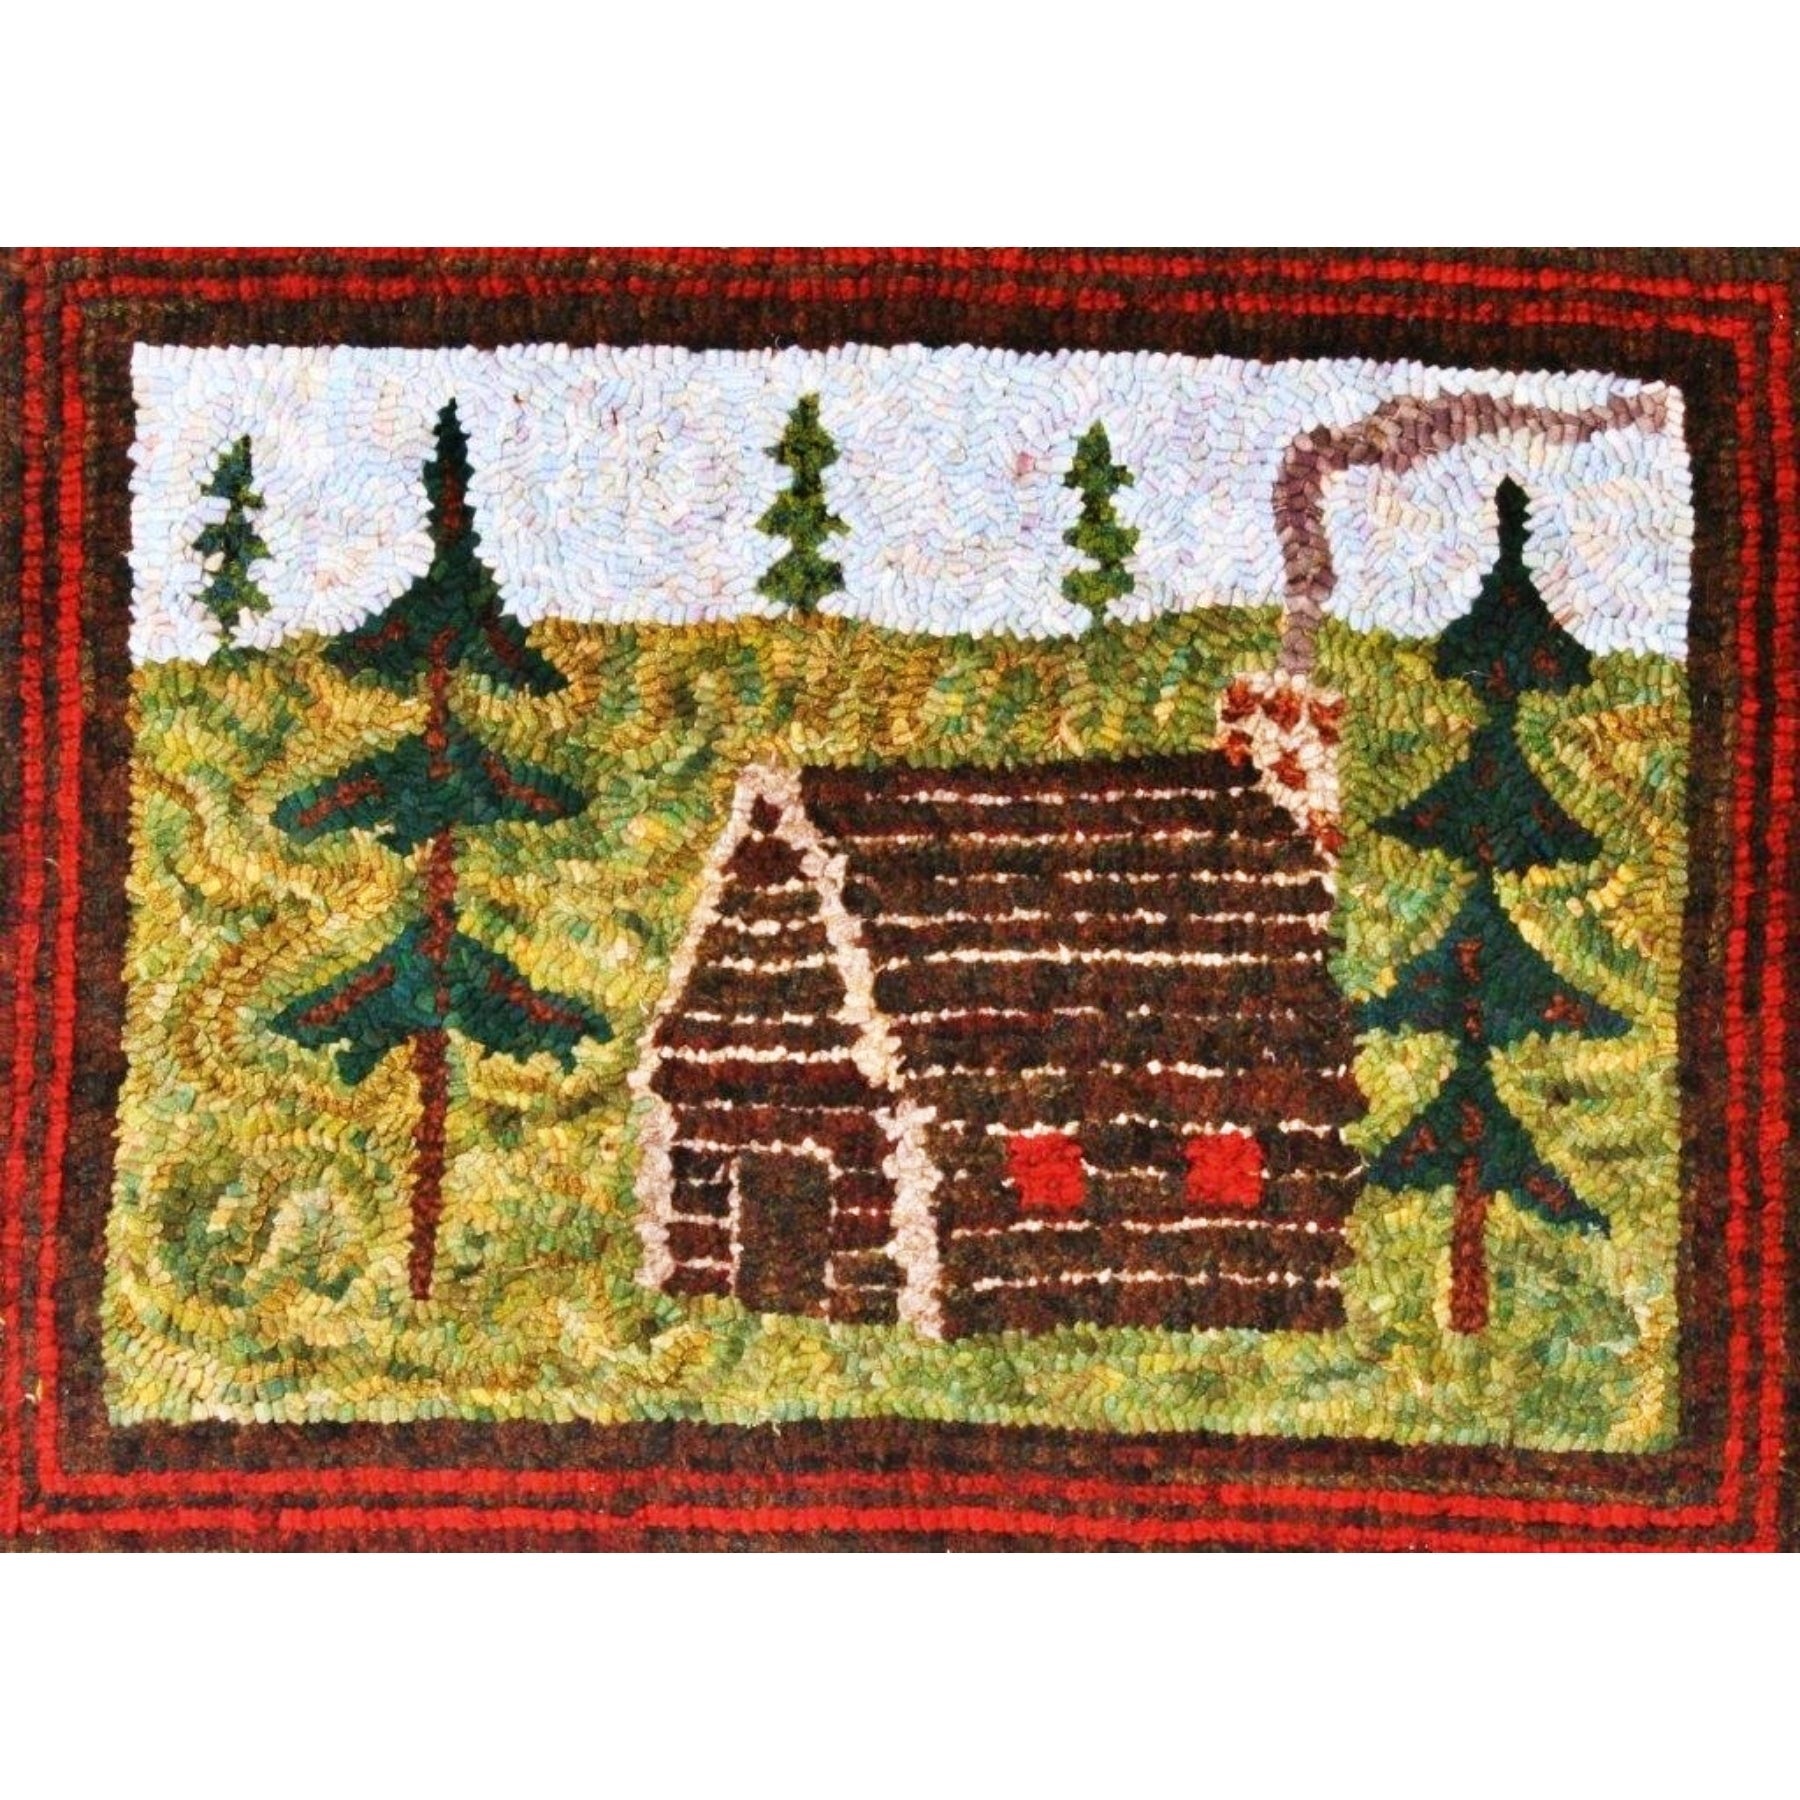 Log Cabin, rug hooked by Karen Guffey